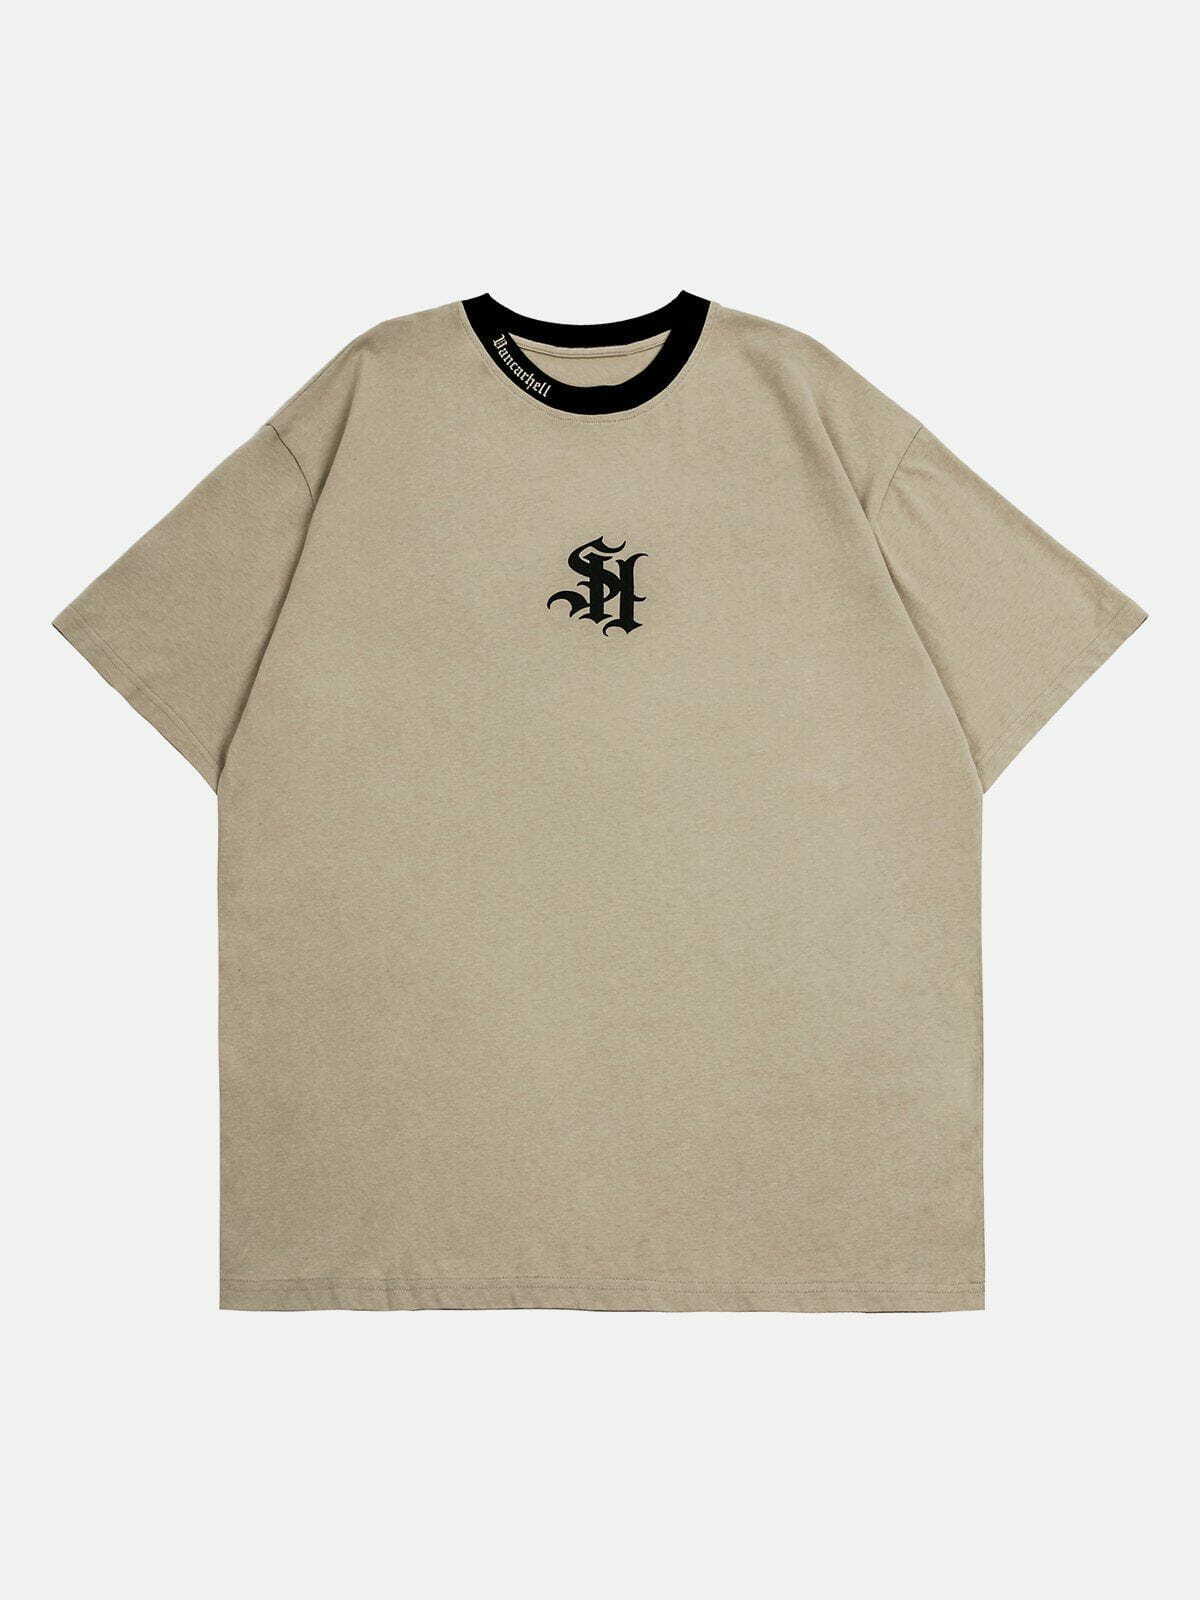 youthful retro print tee edgy  vibrant streetwear shirt 6652